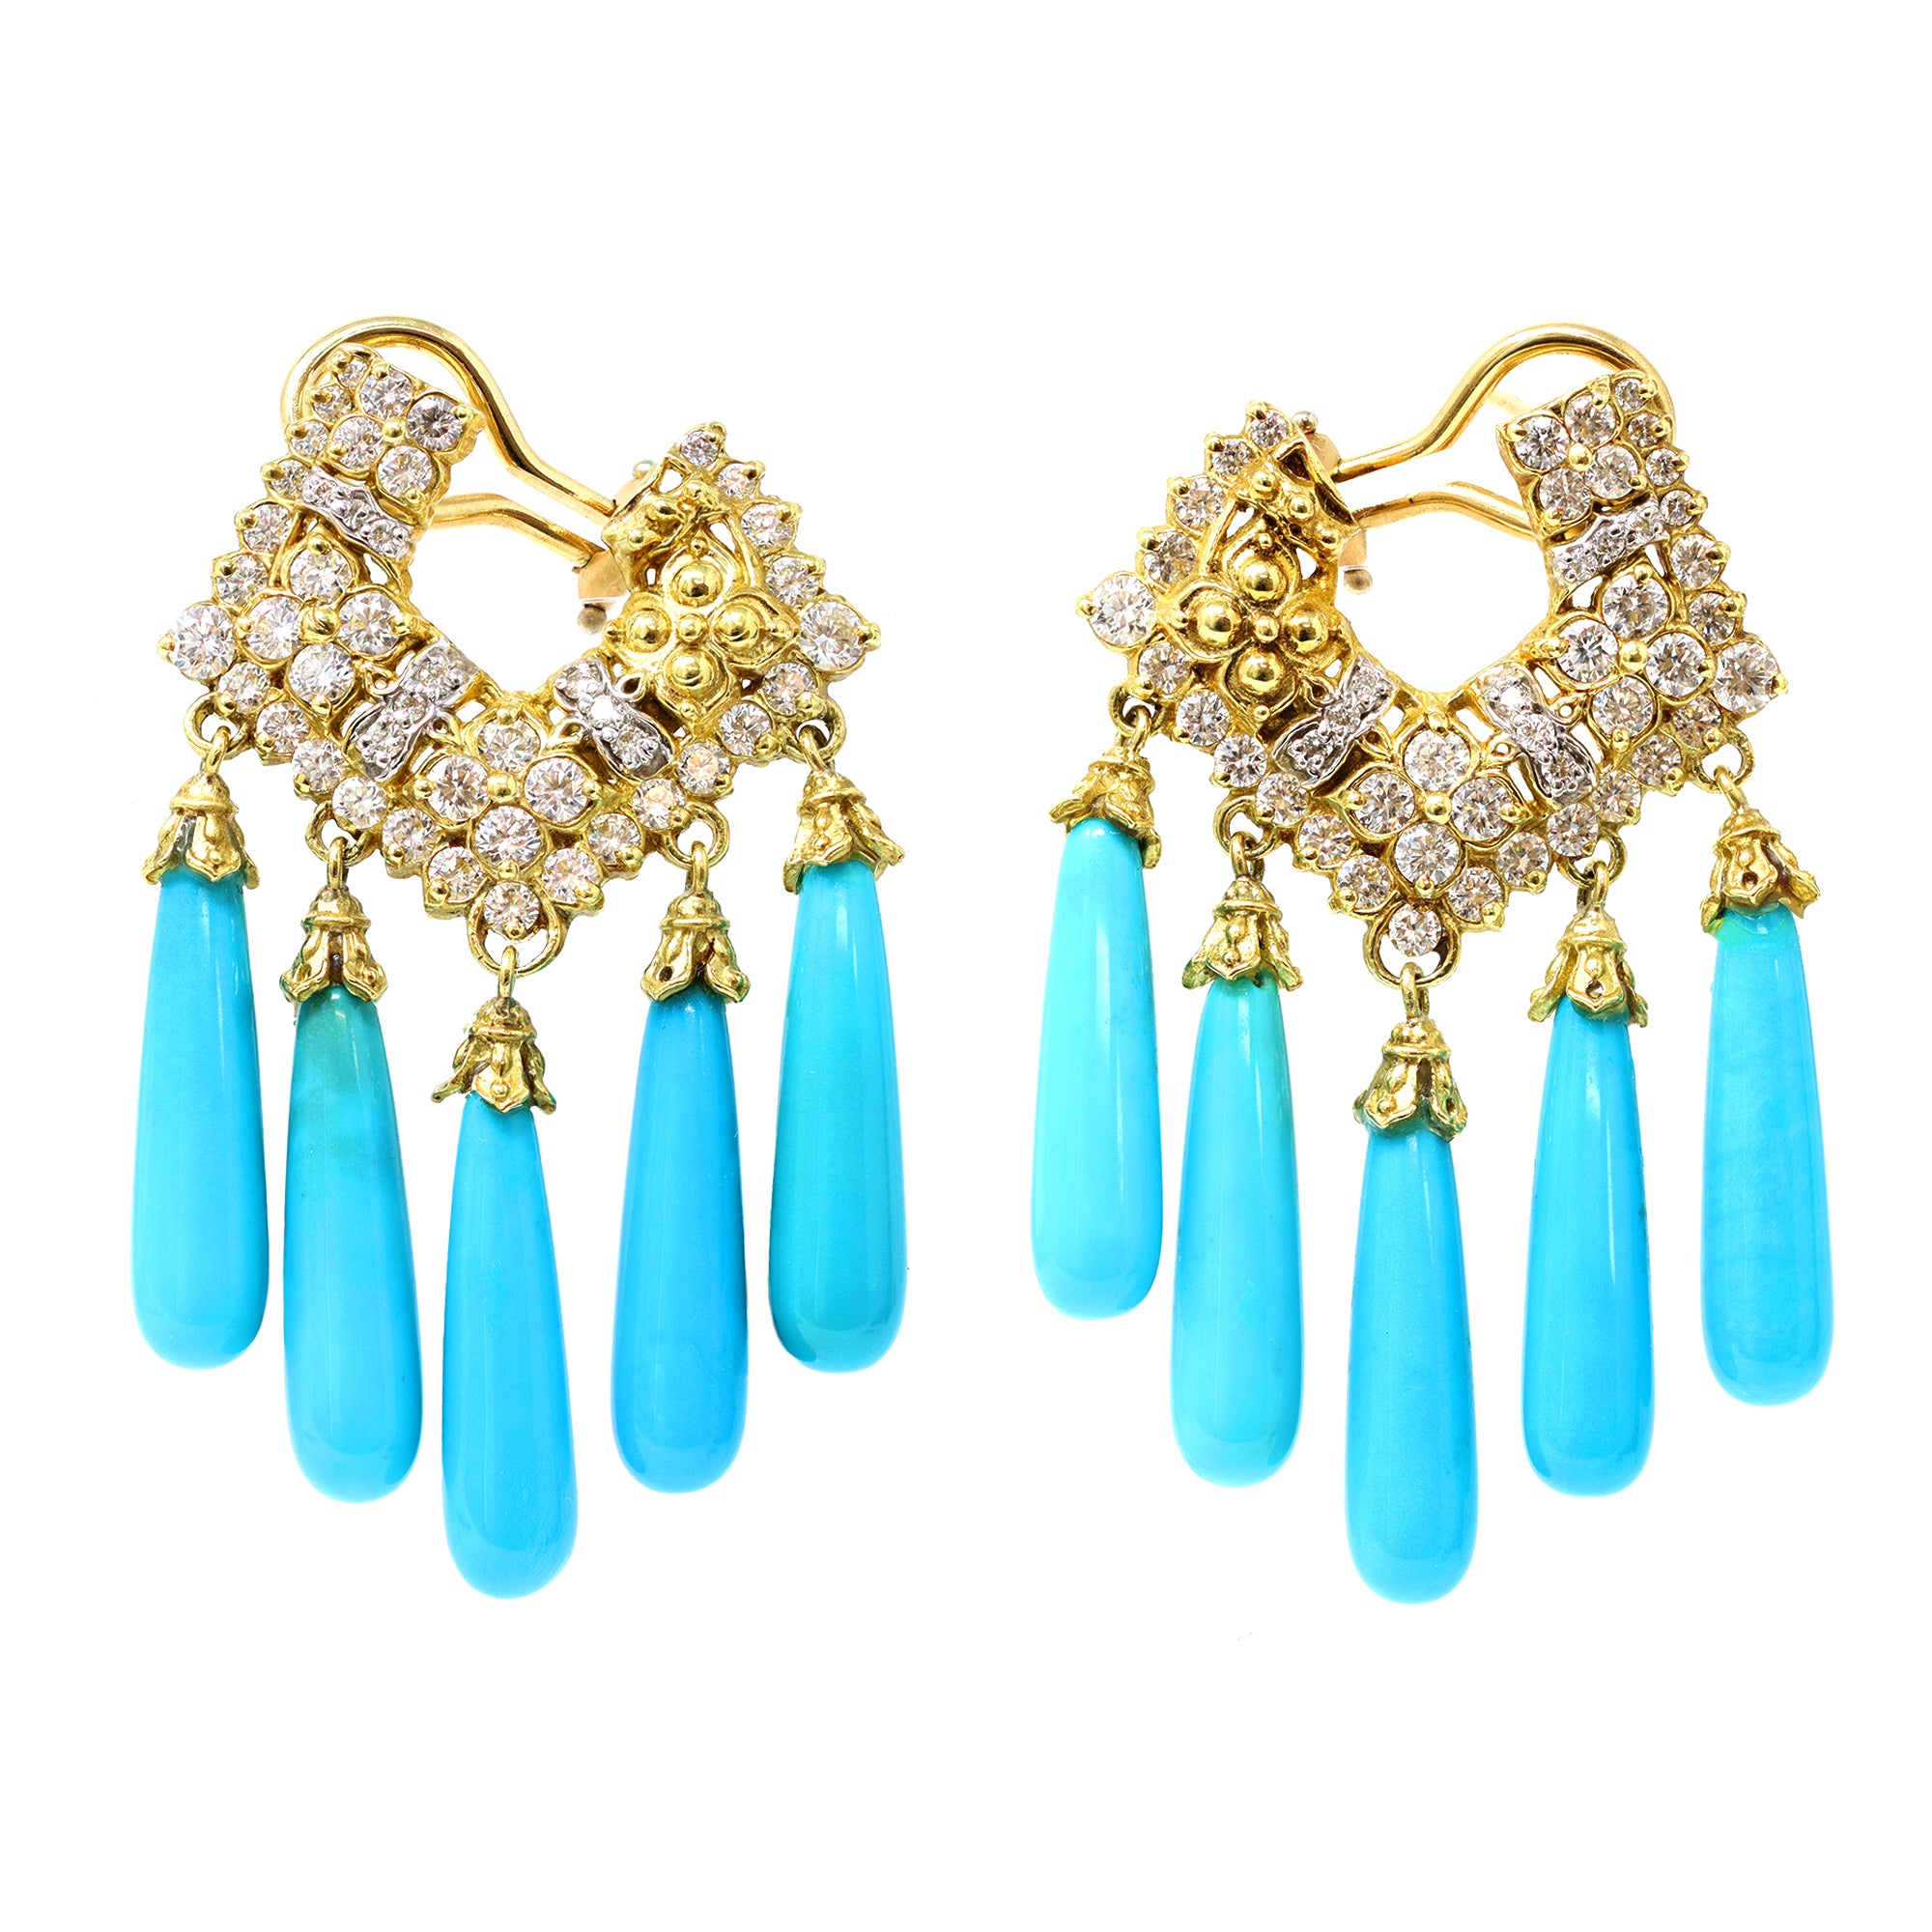 Stambolian Turquoise and Diamond Chandelier Earrings in 18 Karat Yellow Gold